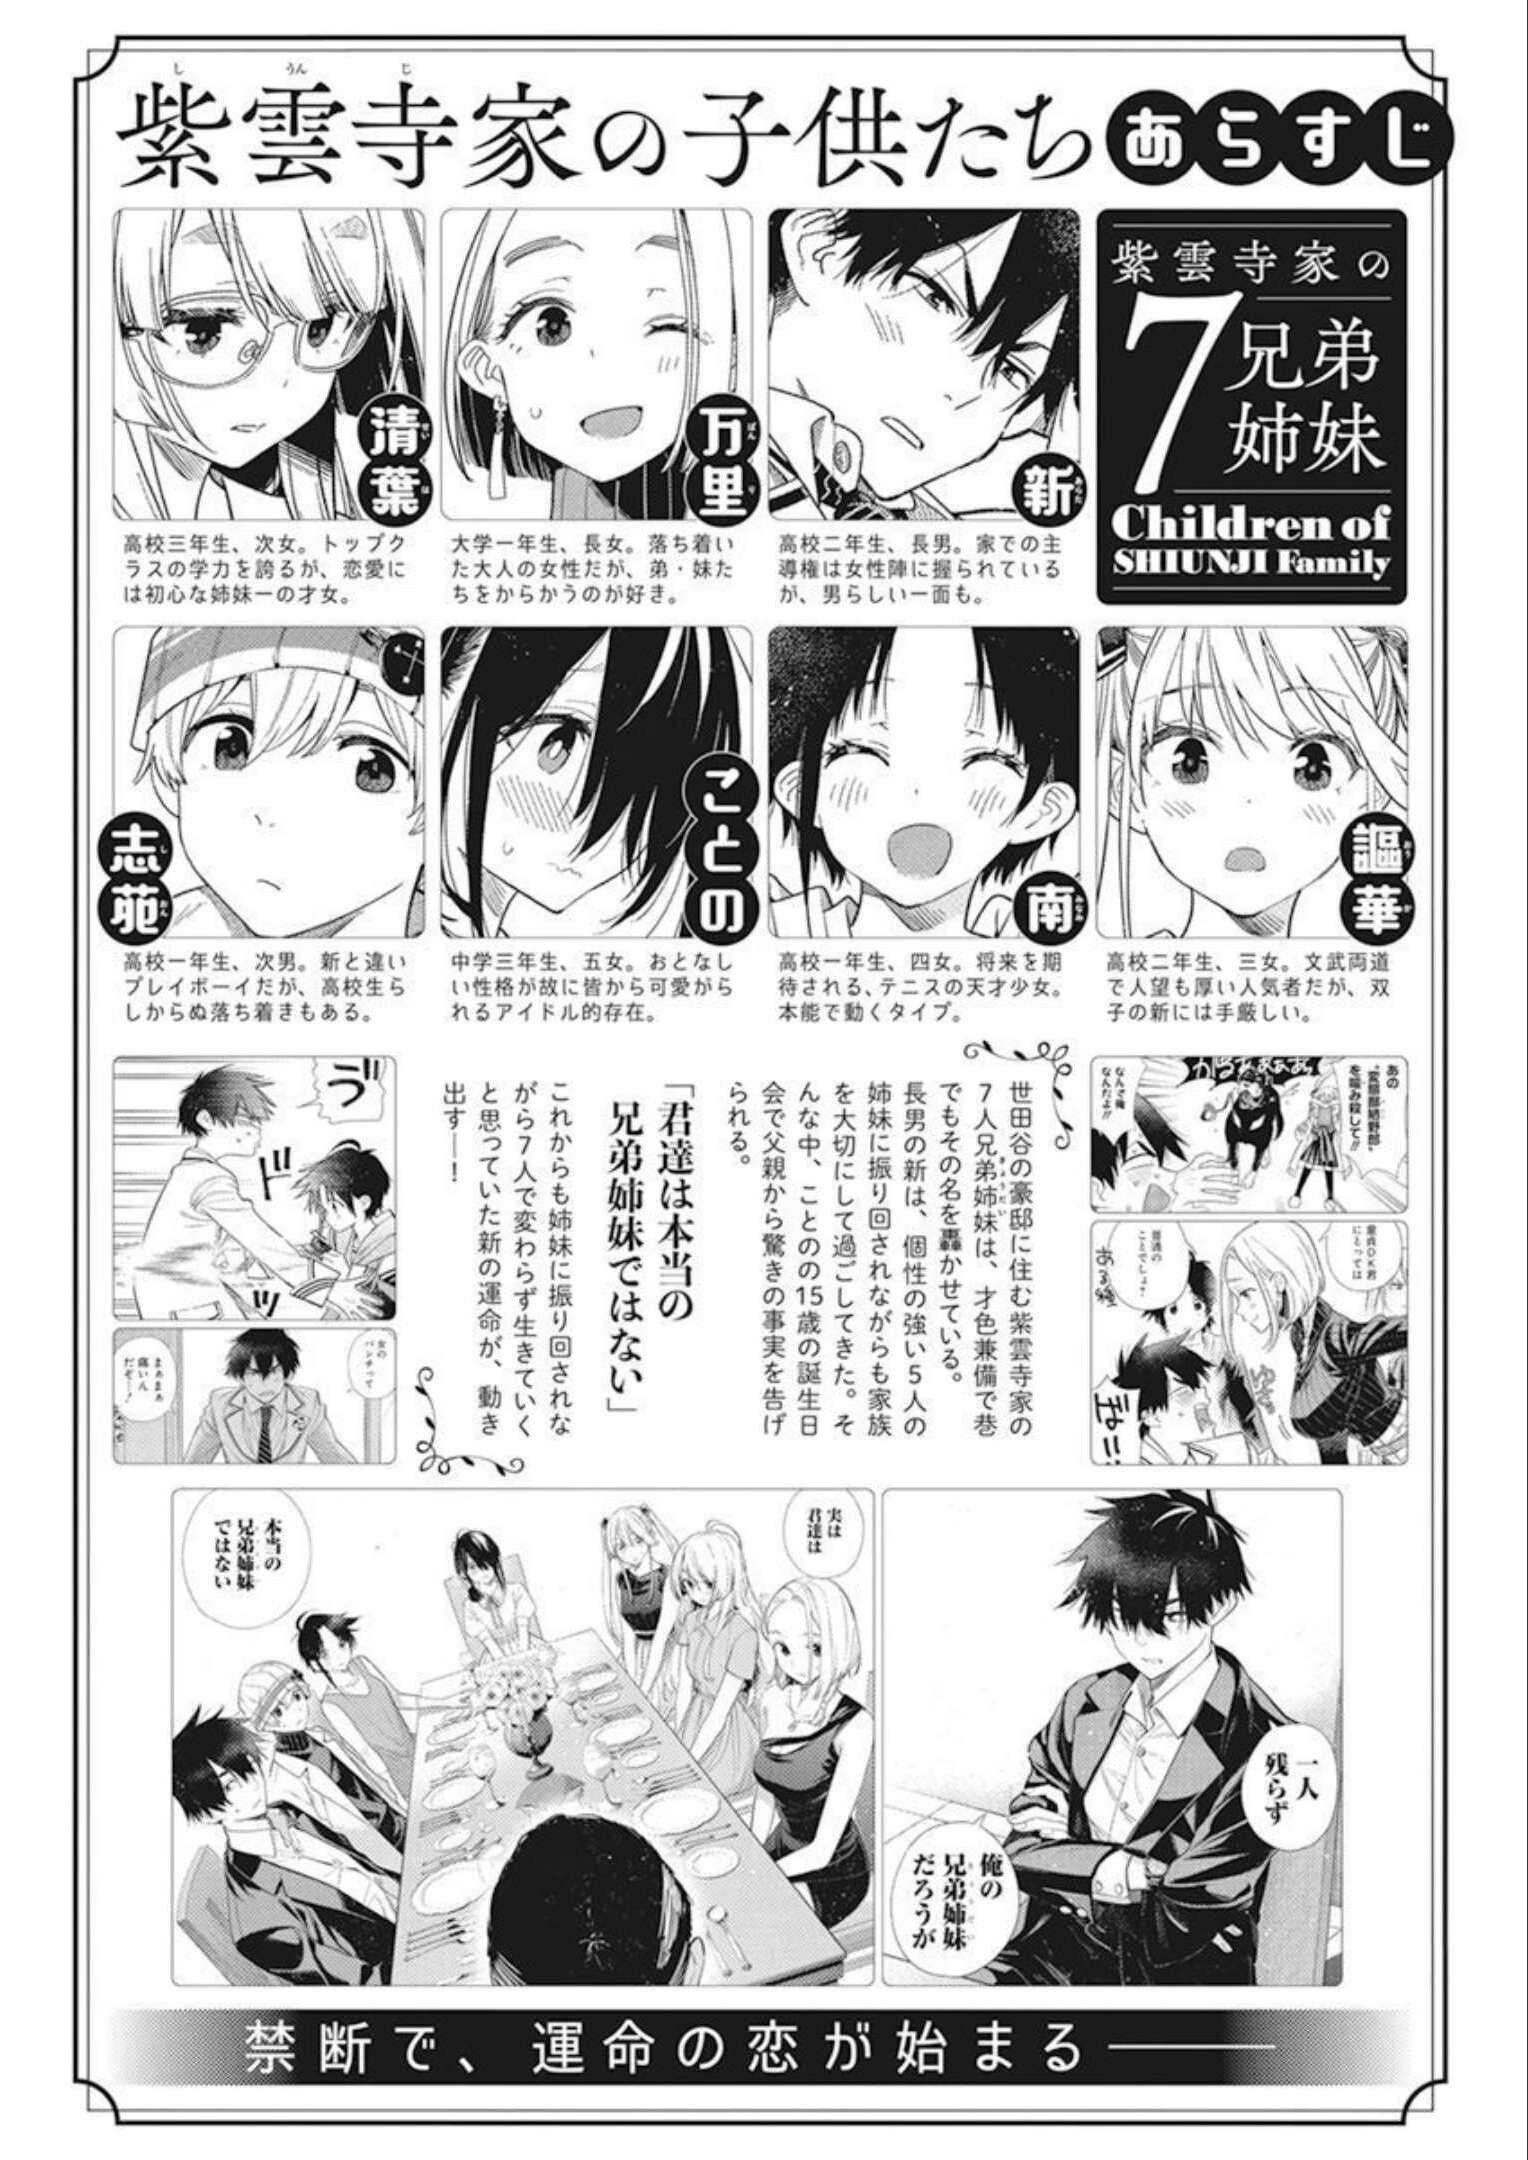 Shiunji-ke no Kodomotachi (Children of the Shiunji Family) - Chapter 02 - Page 1